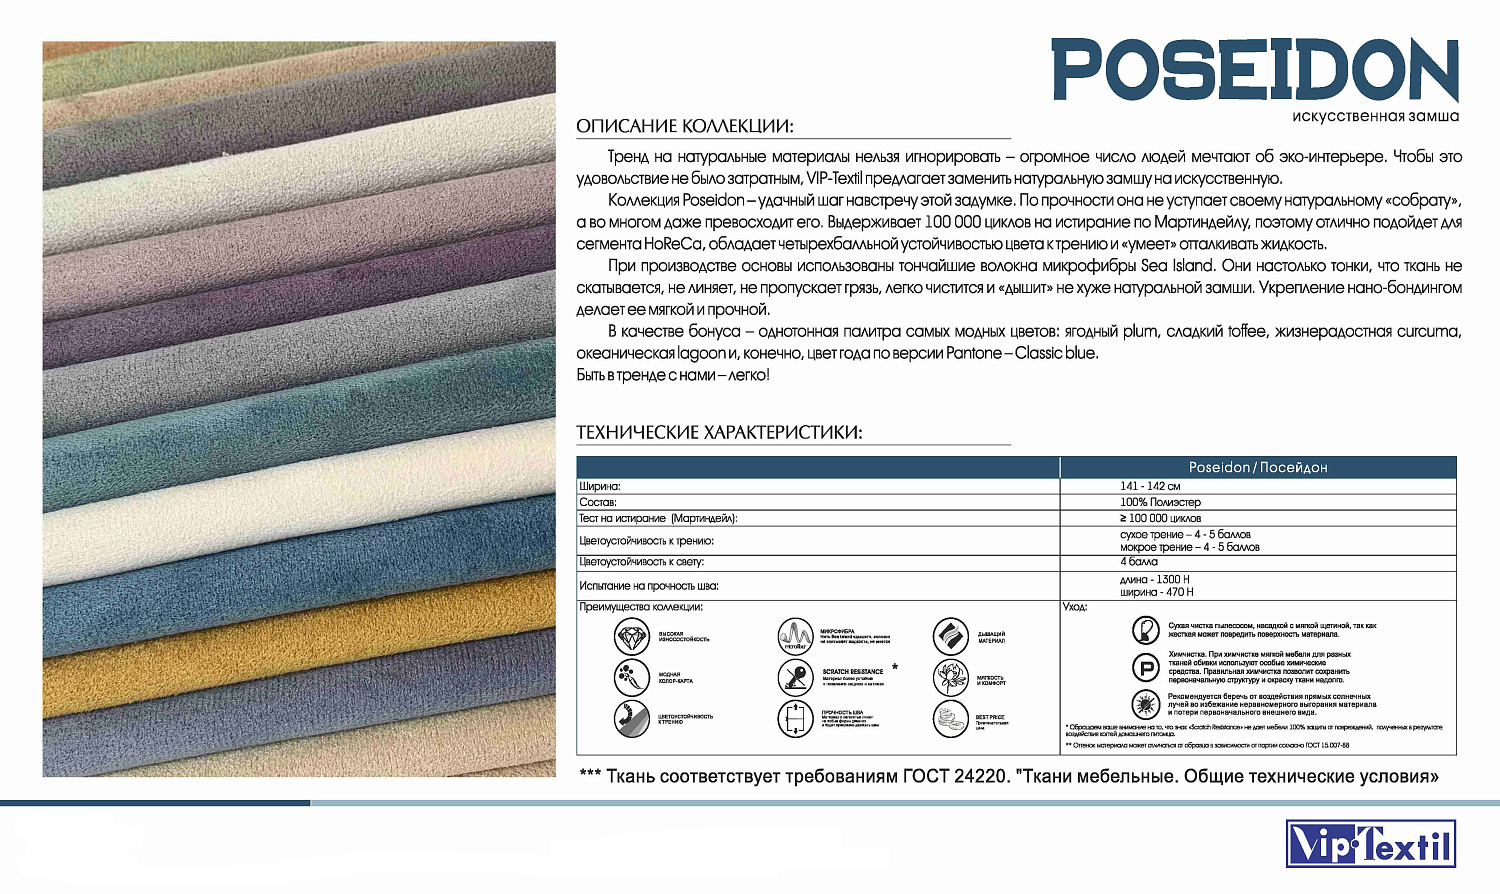 Vip textil мебельные ткани poseidon